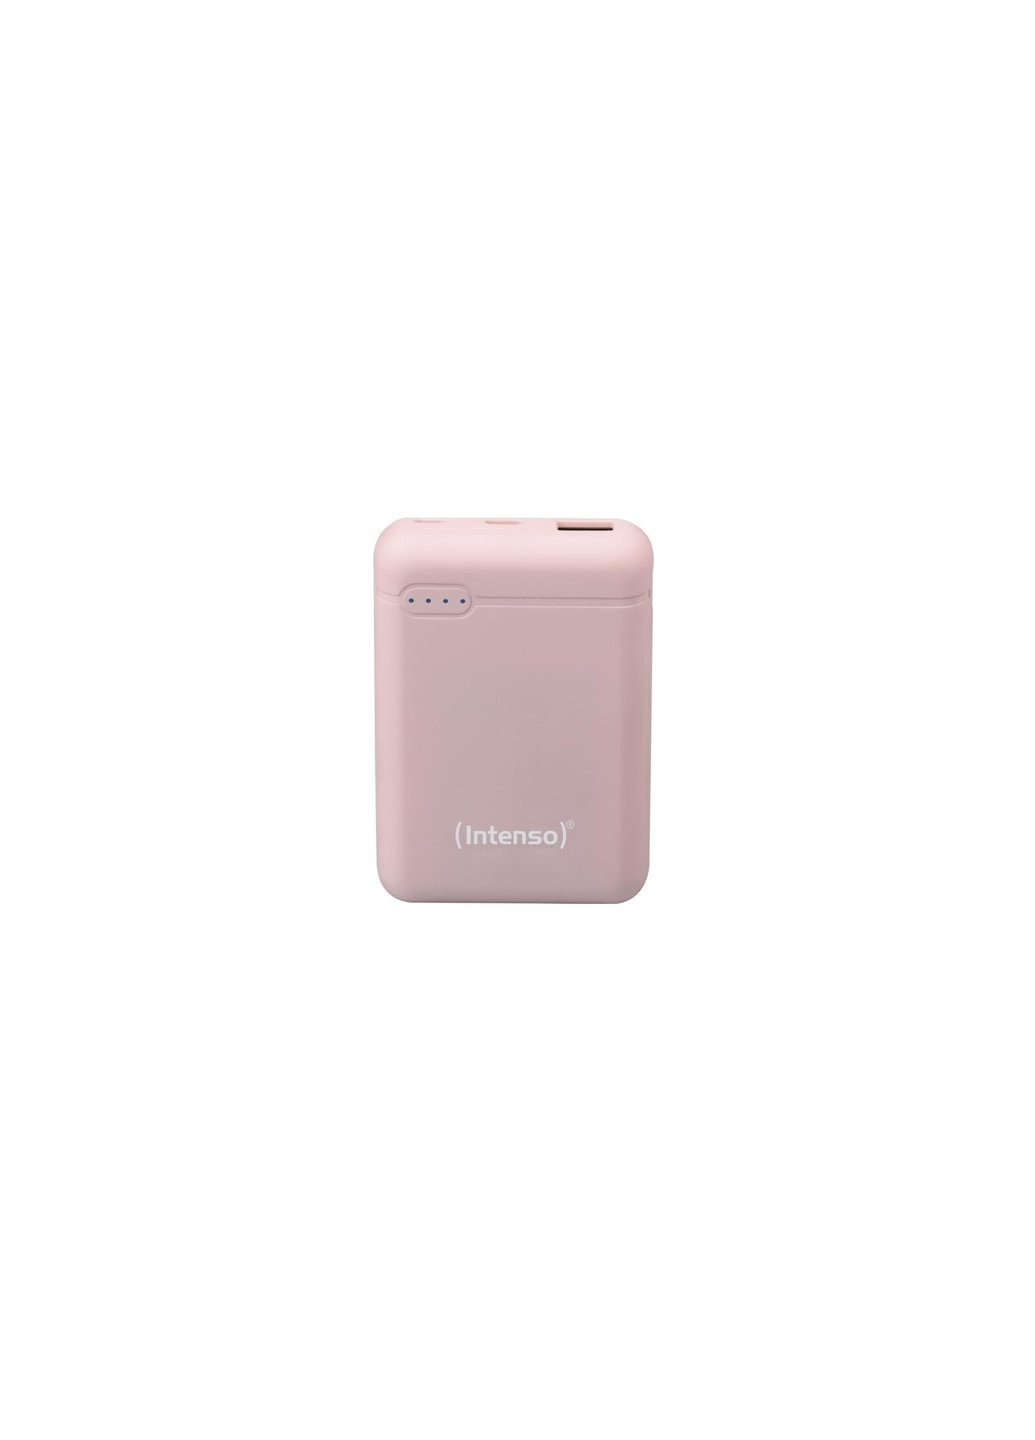 Батарея универсальная XS10000 10000mAh microUSB, USB-A, USB Type-C, Pink (7313533) Intenso